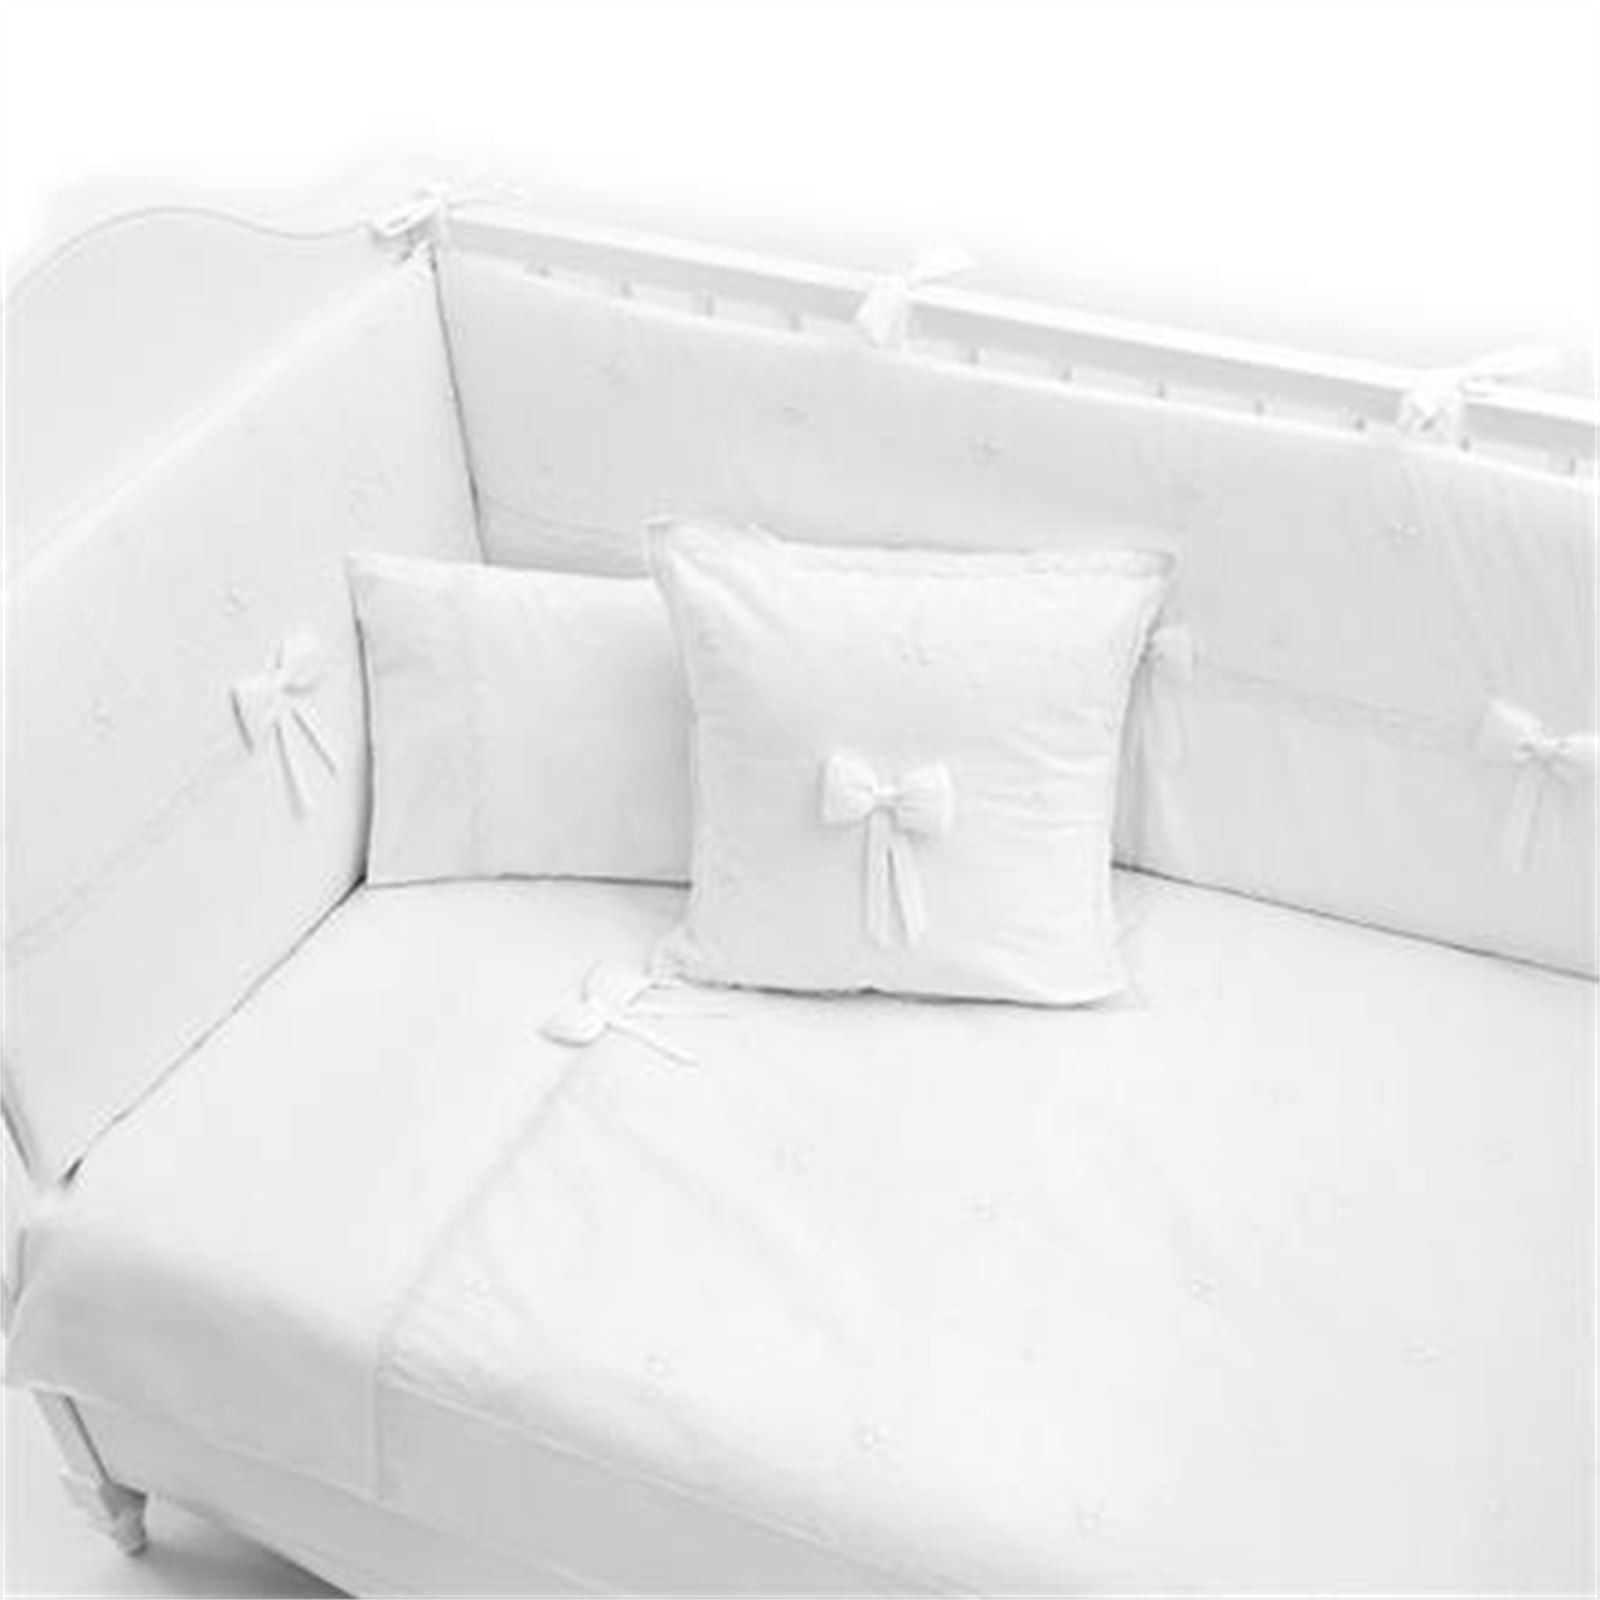 Funna Baby Uyku Setı 8 Parca 80x140 cm Beyaz